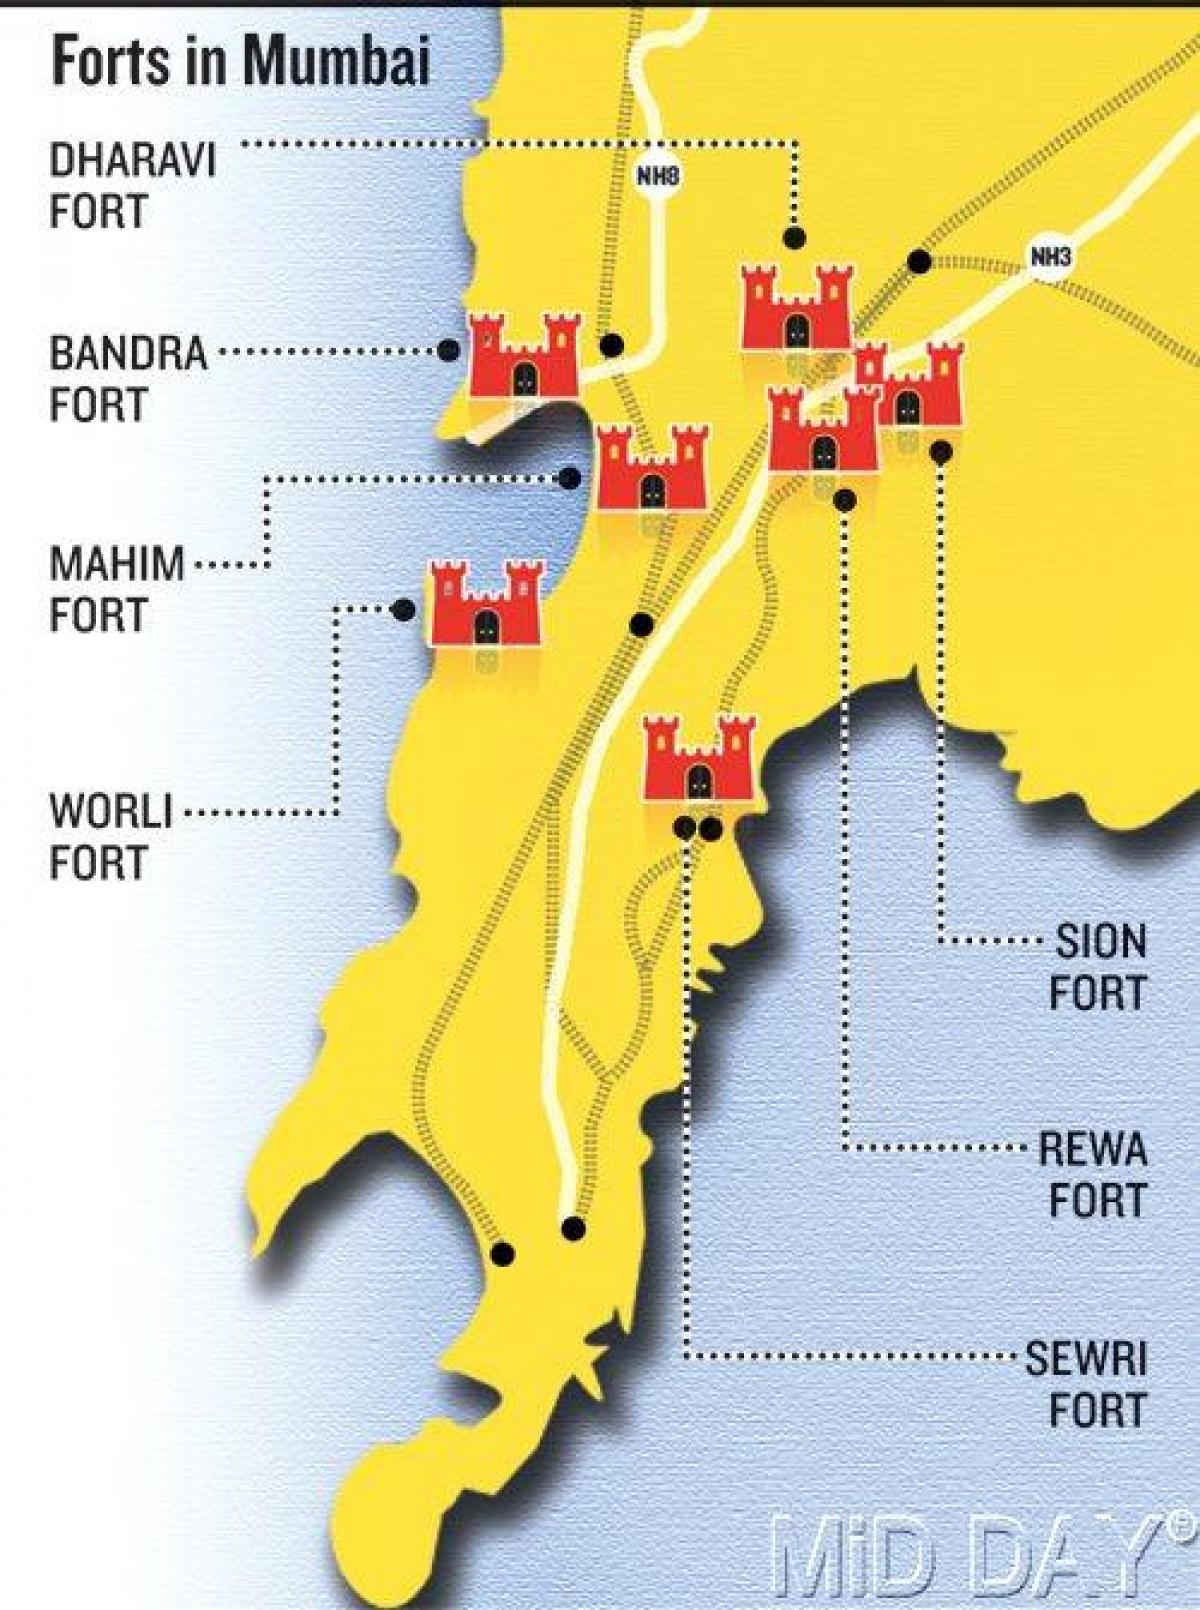 Mumbai fort zonu karte